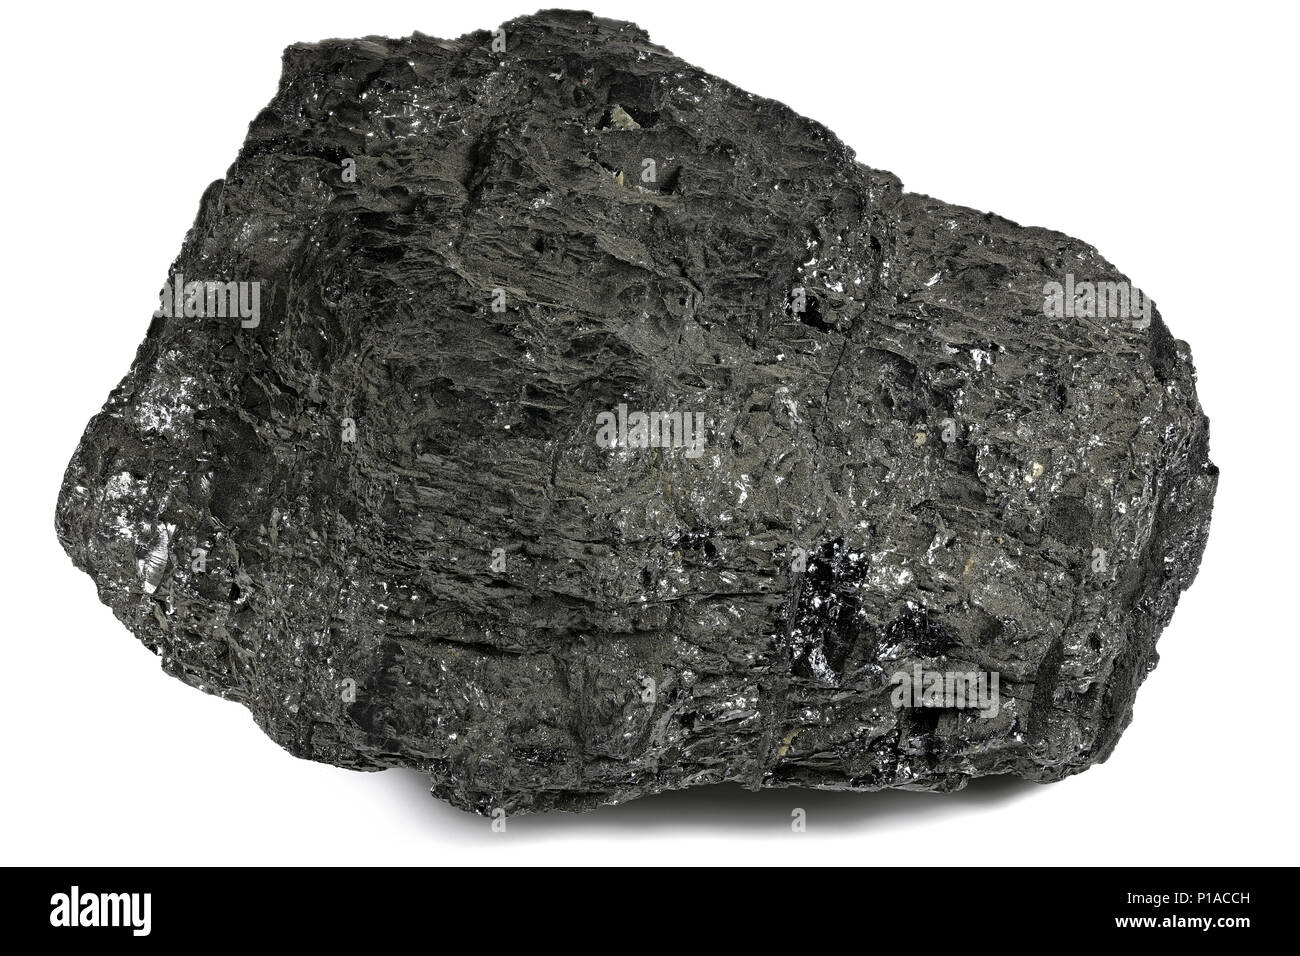 Lignite (Brown Coal) - Geology Superstore